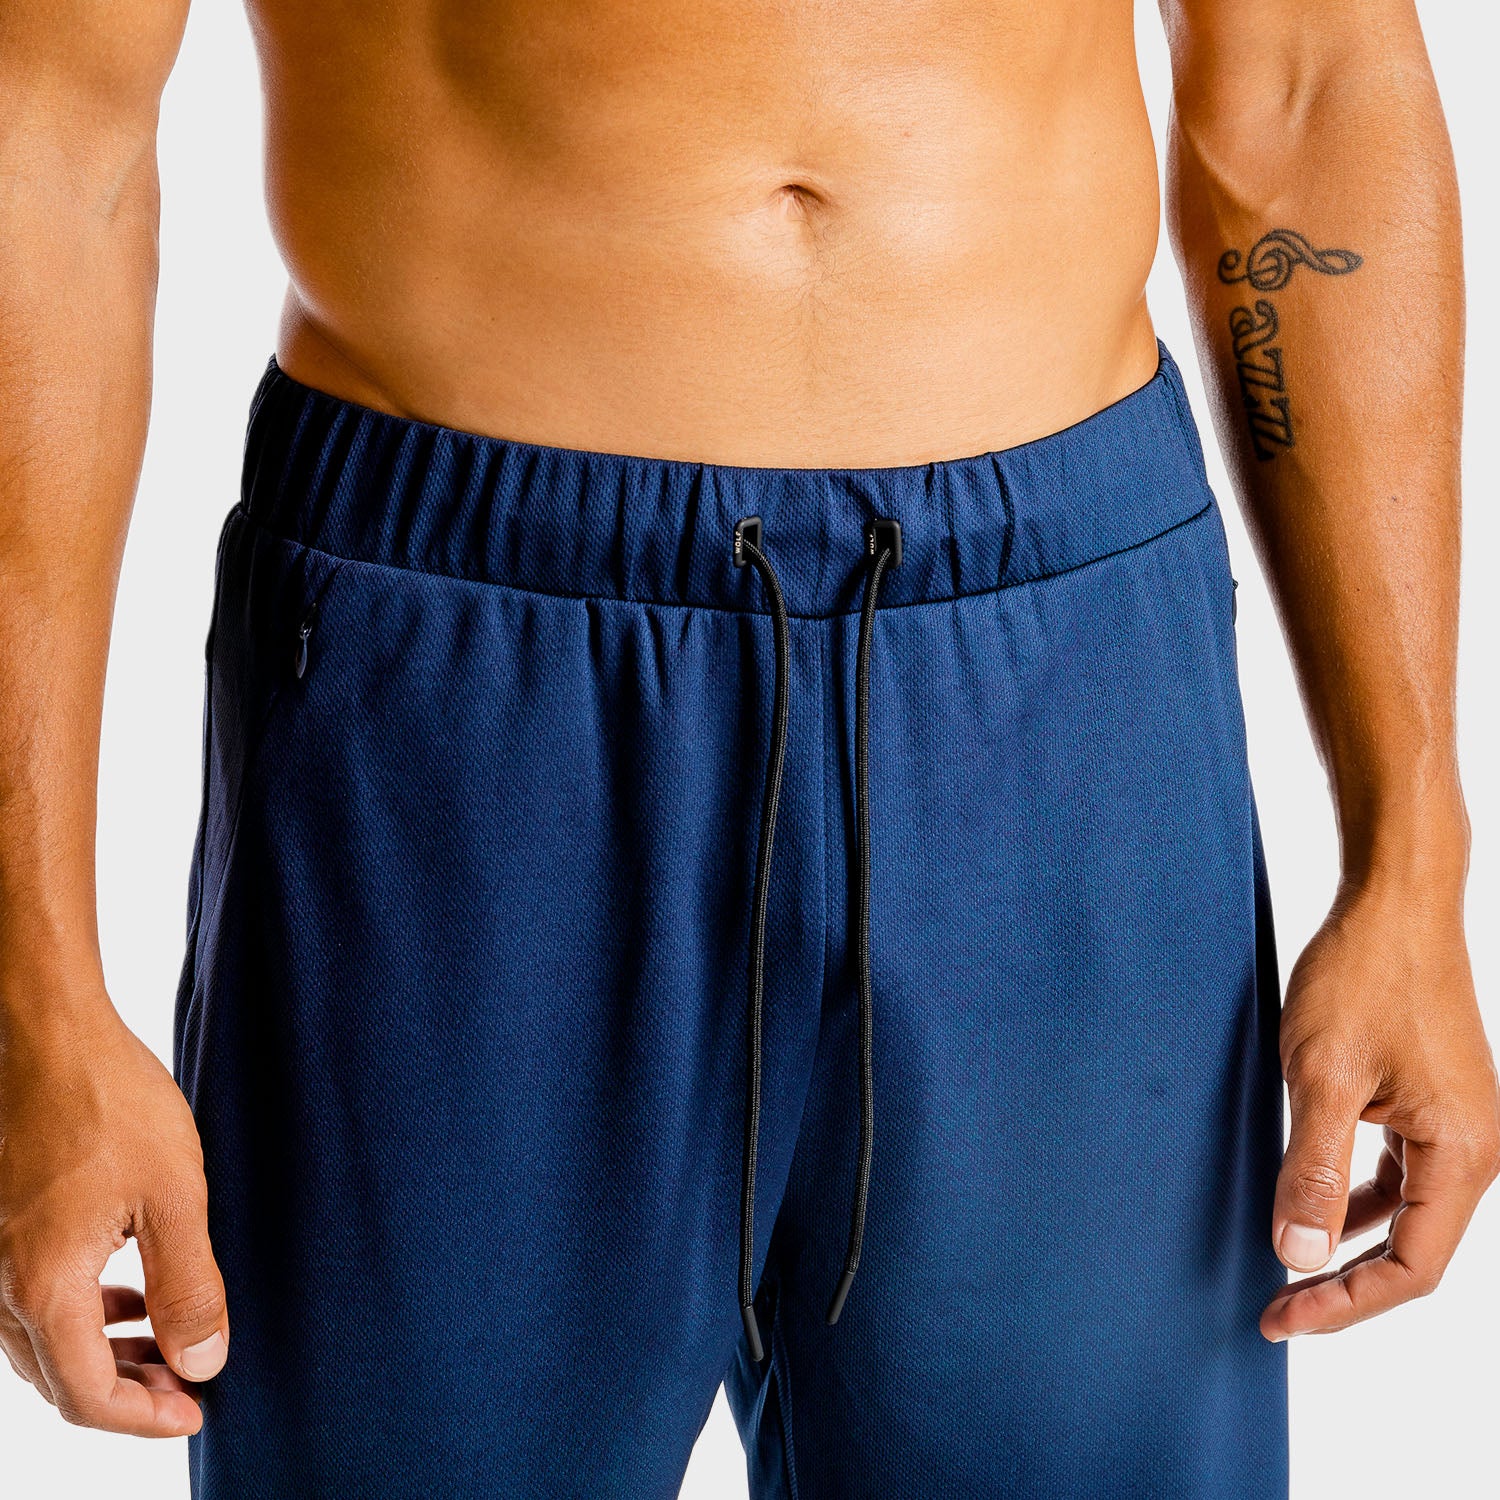 squatwolf-workout-short-for-men-flux-basketball-shorts-navy-gym-wear